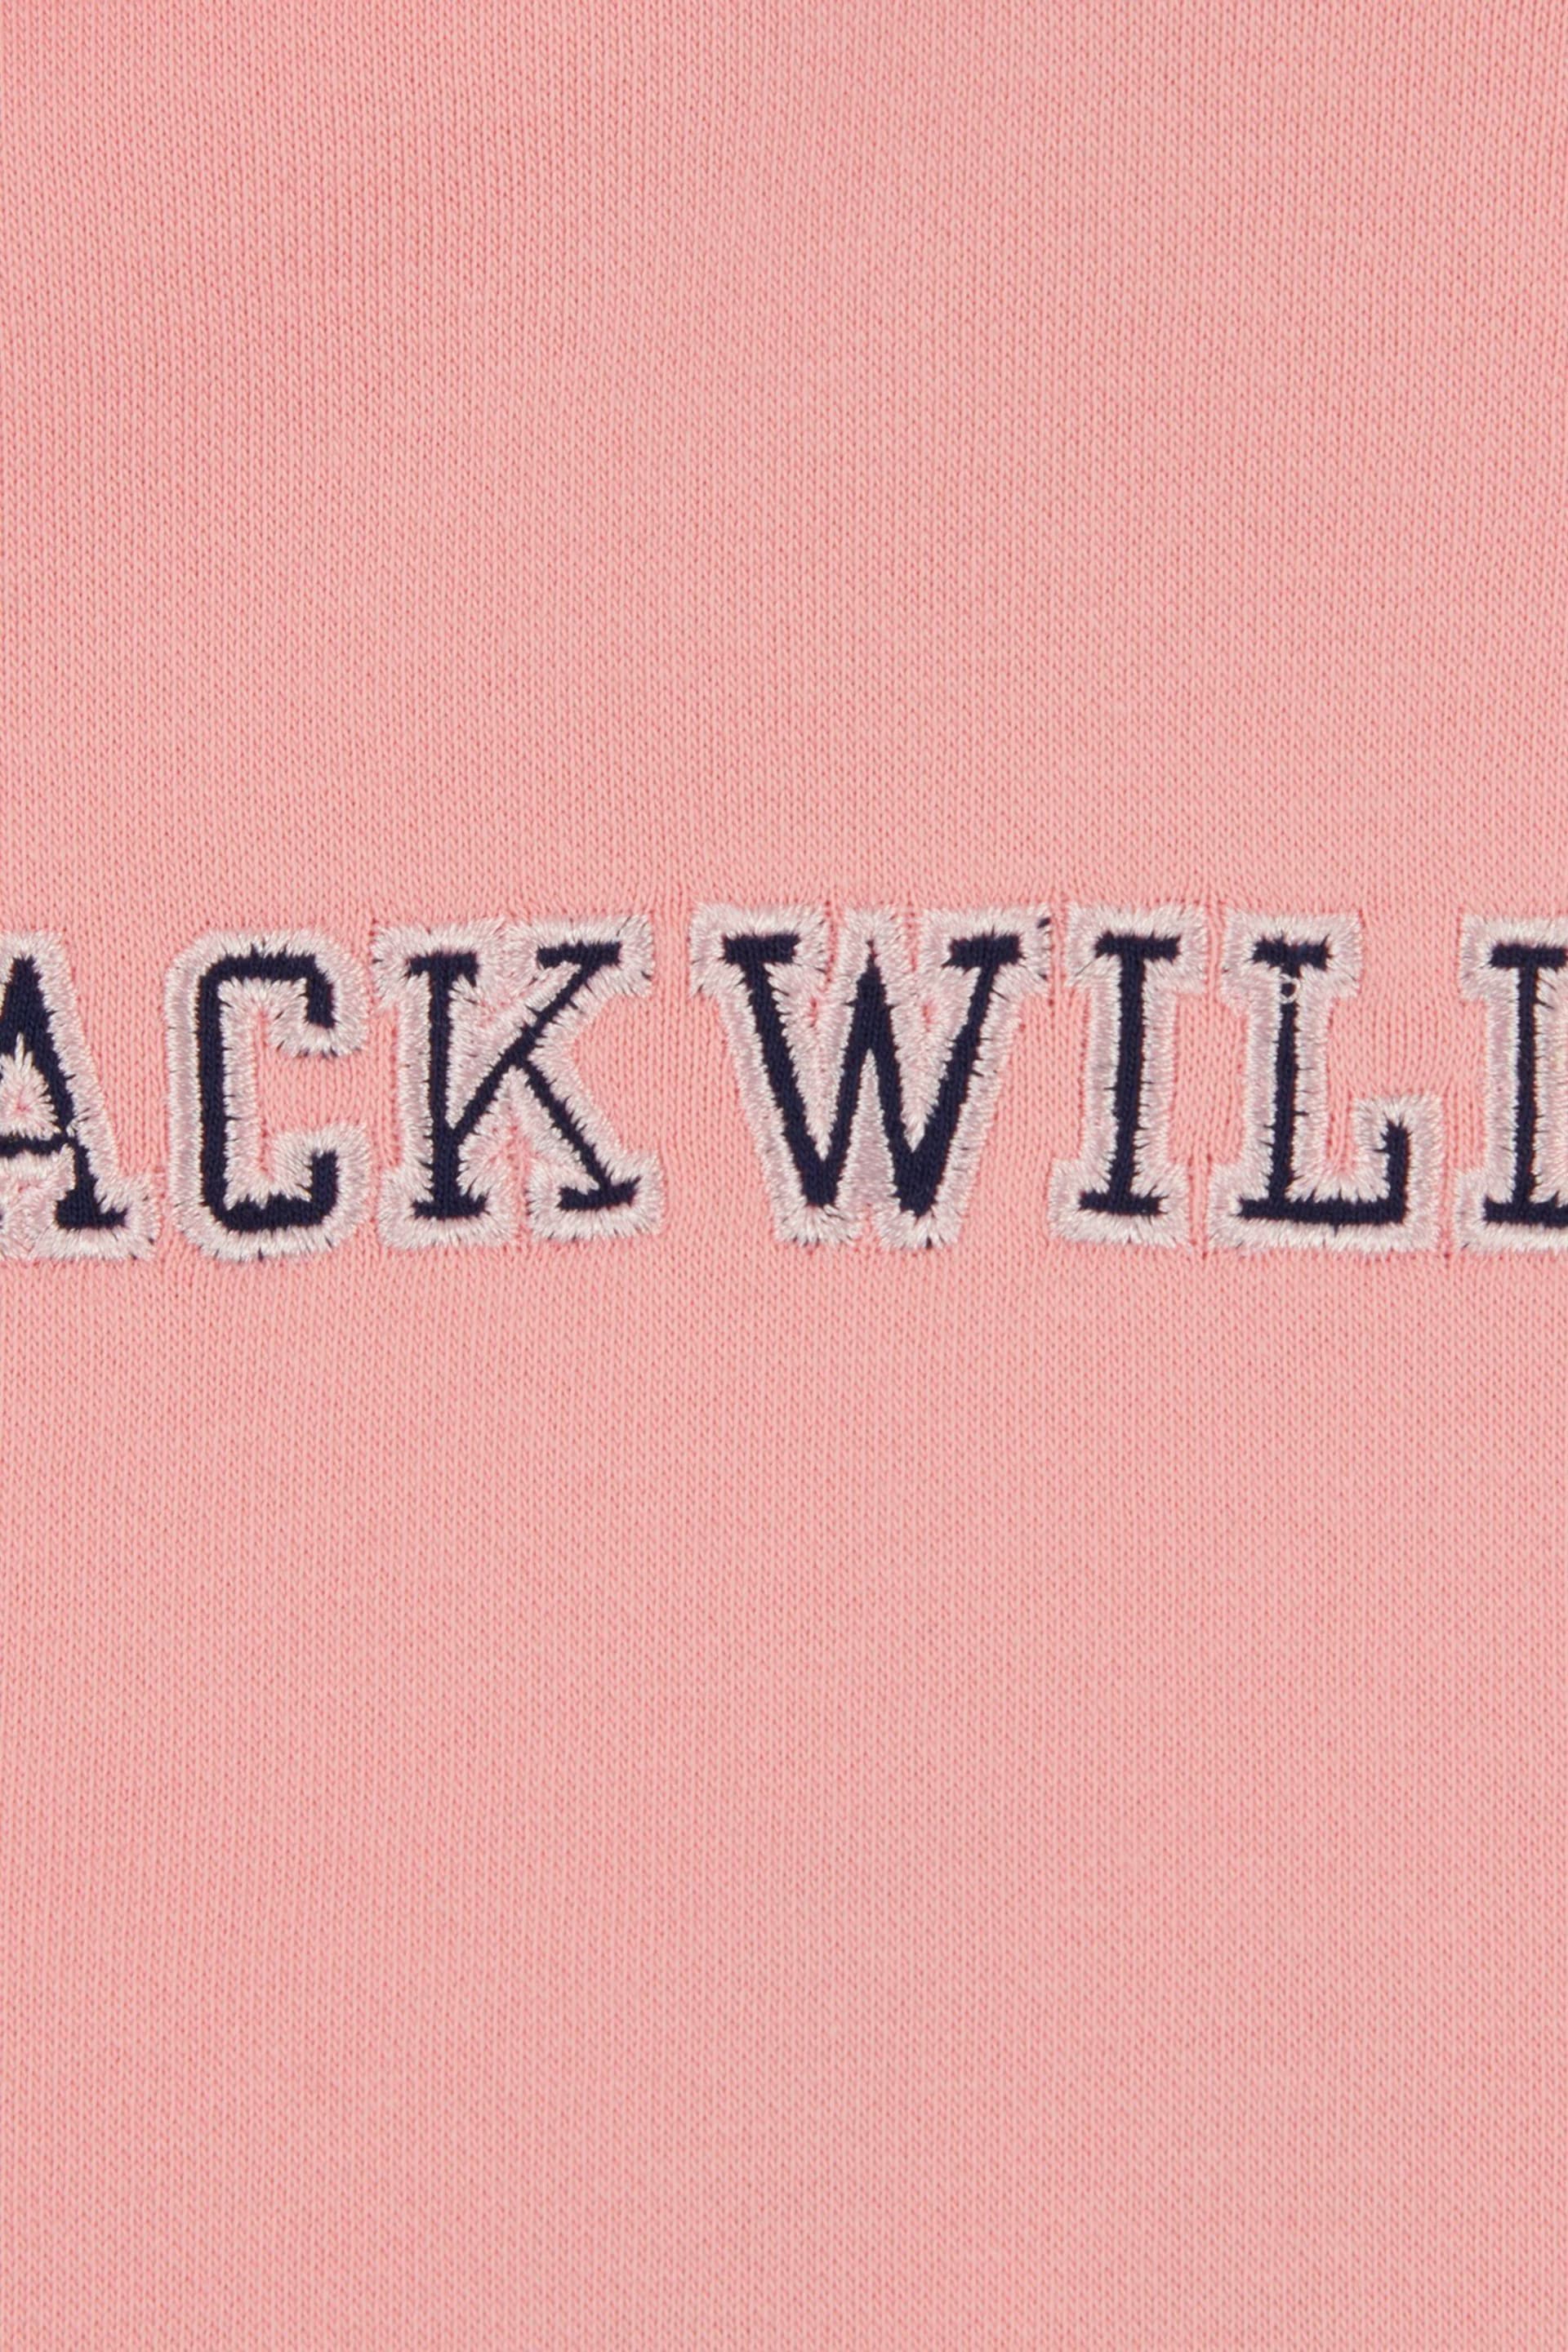 Jack Wills Oversize Pink Varsity Hoodie - Image 4 of 4